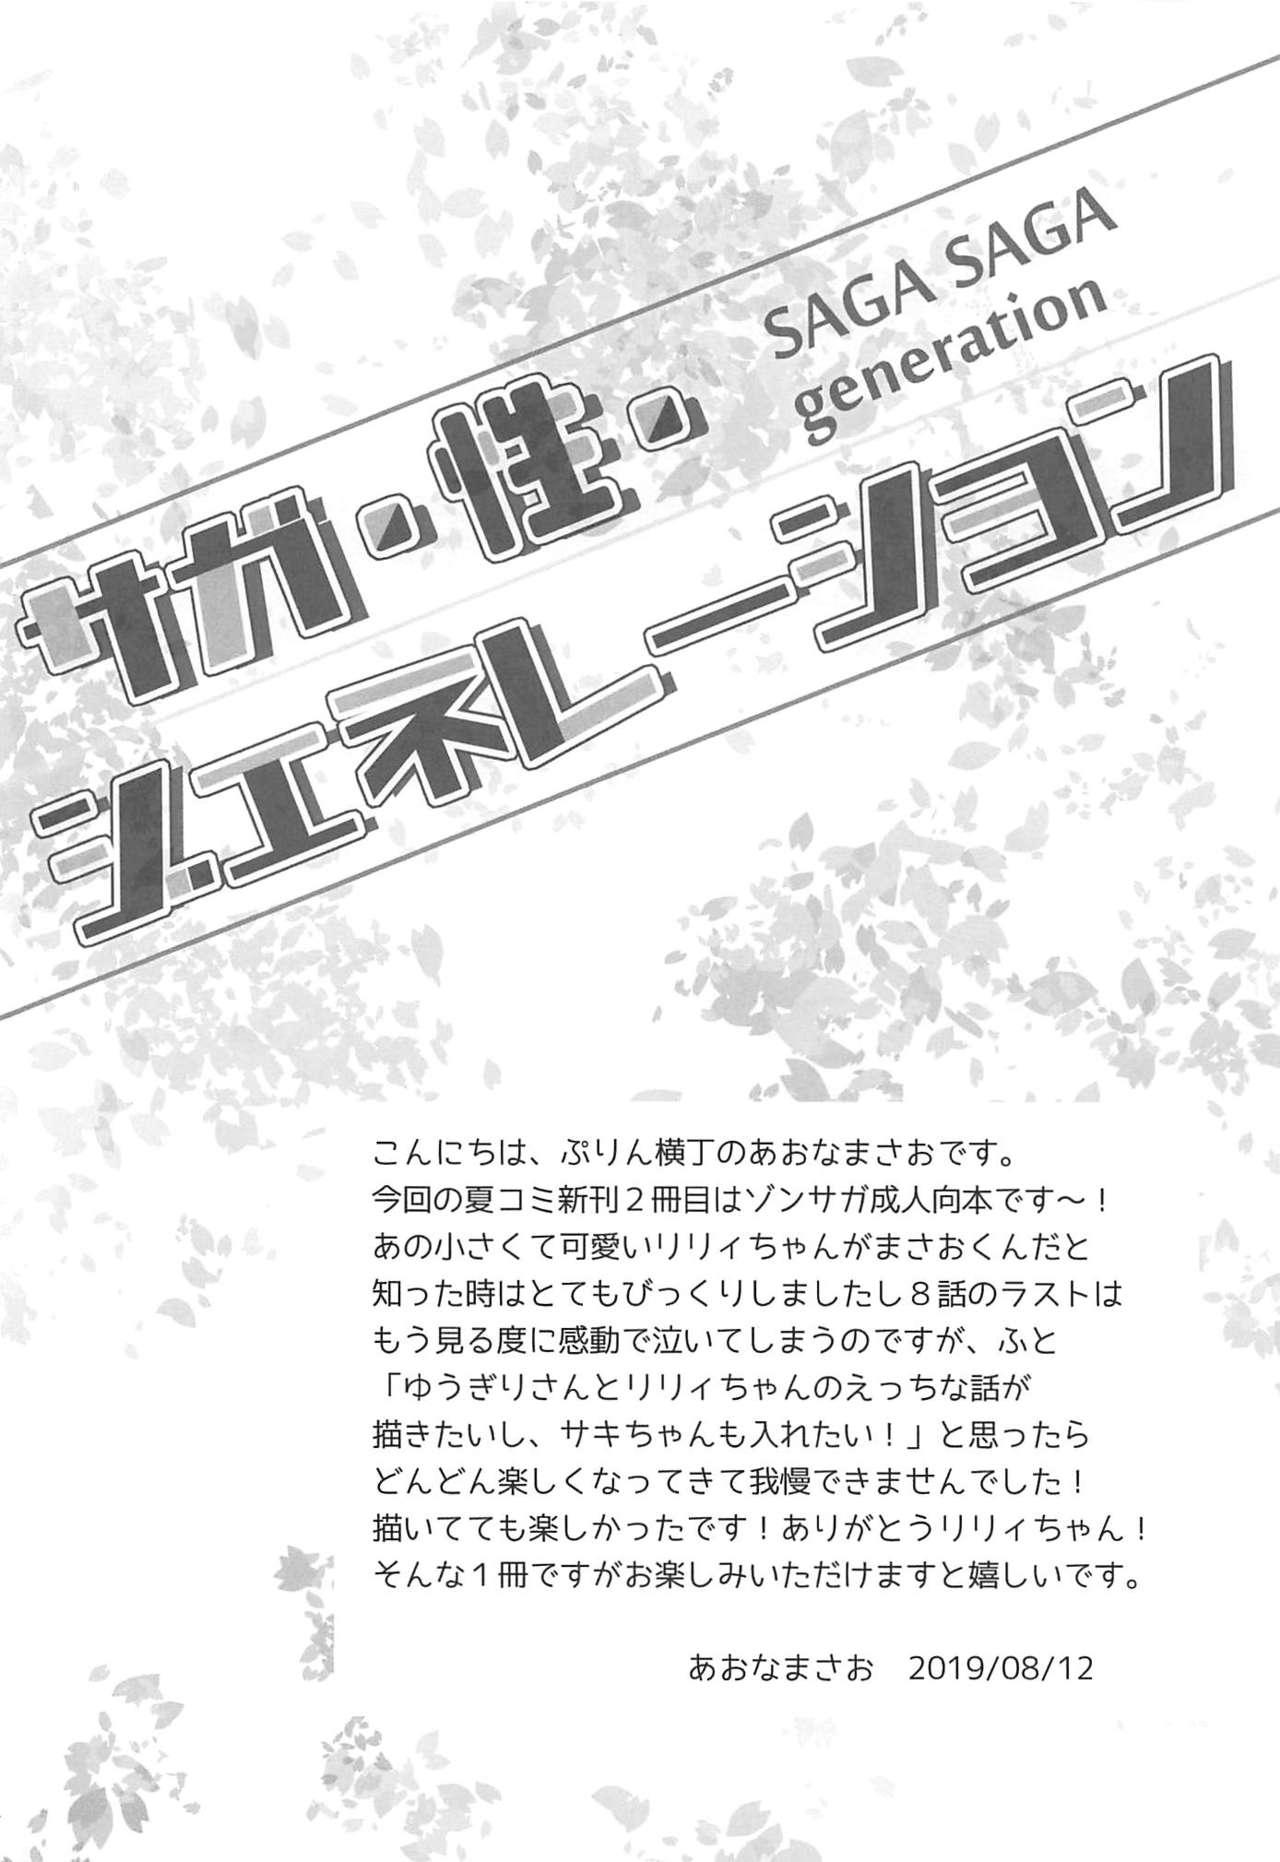 Cutie SAGA SAGA generation - Zombie land saga Les - Page 3